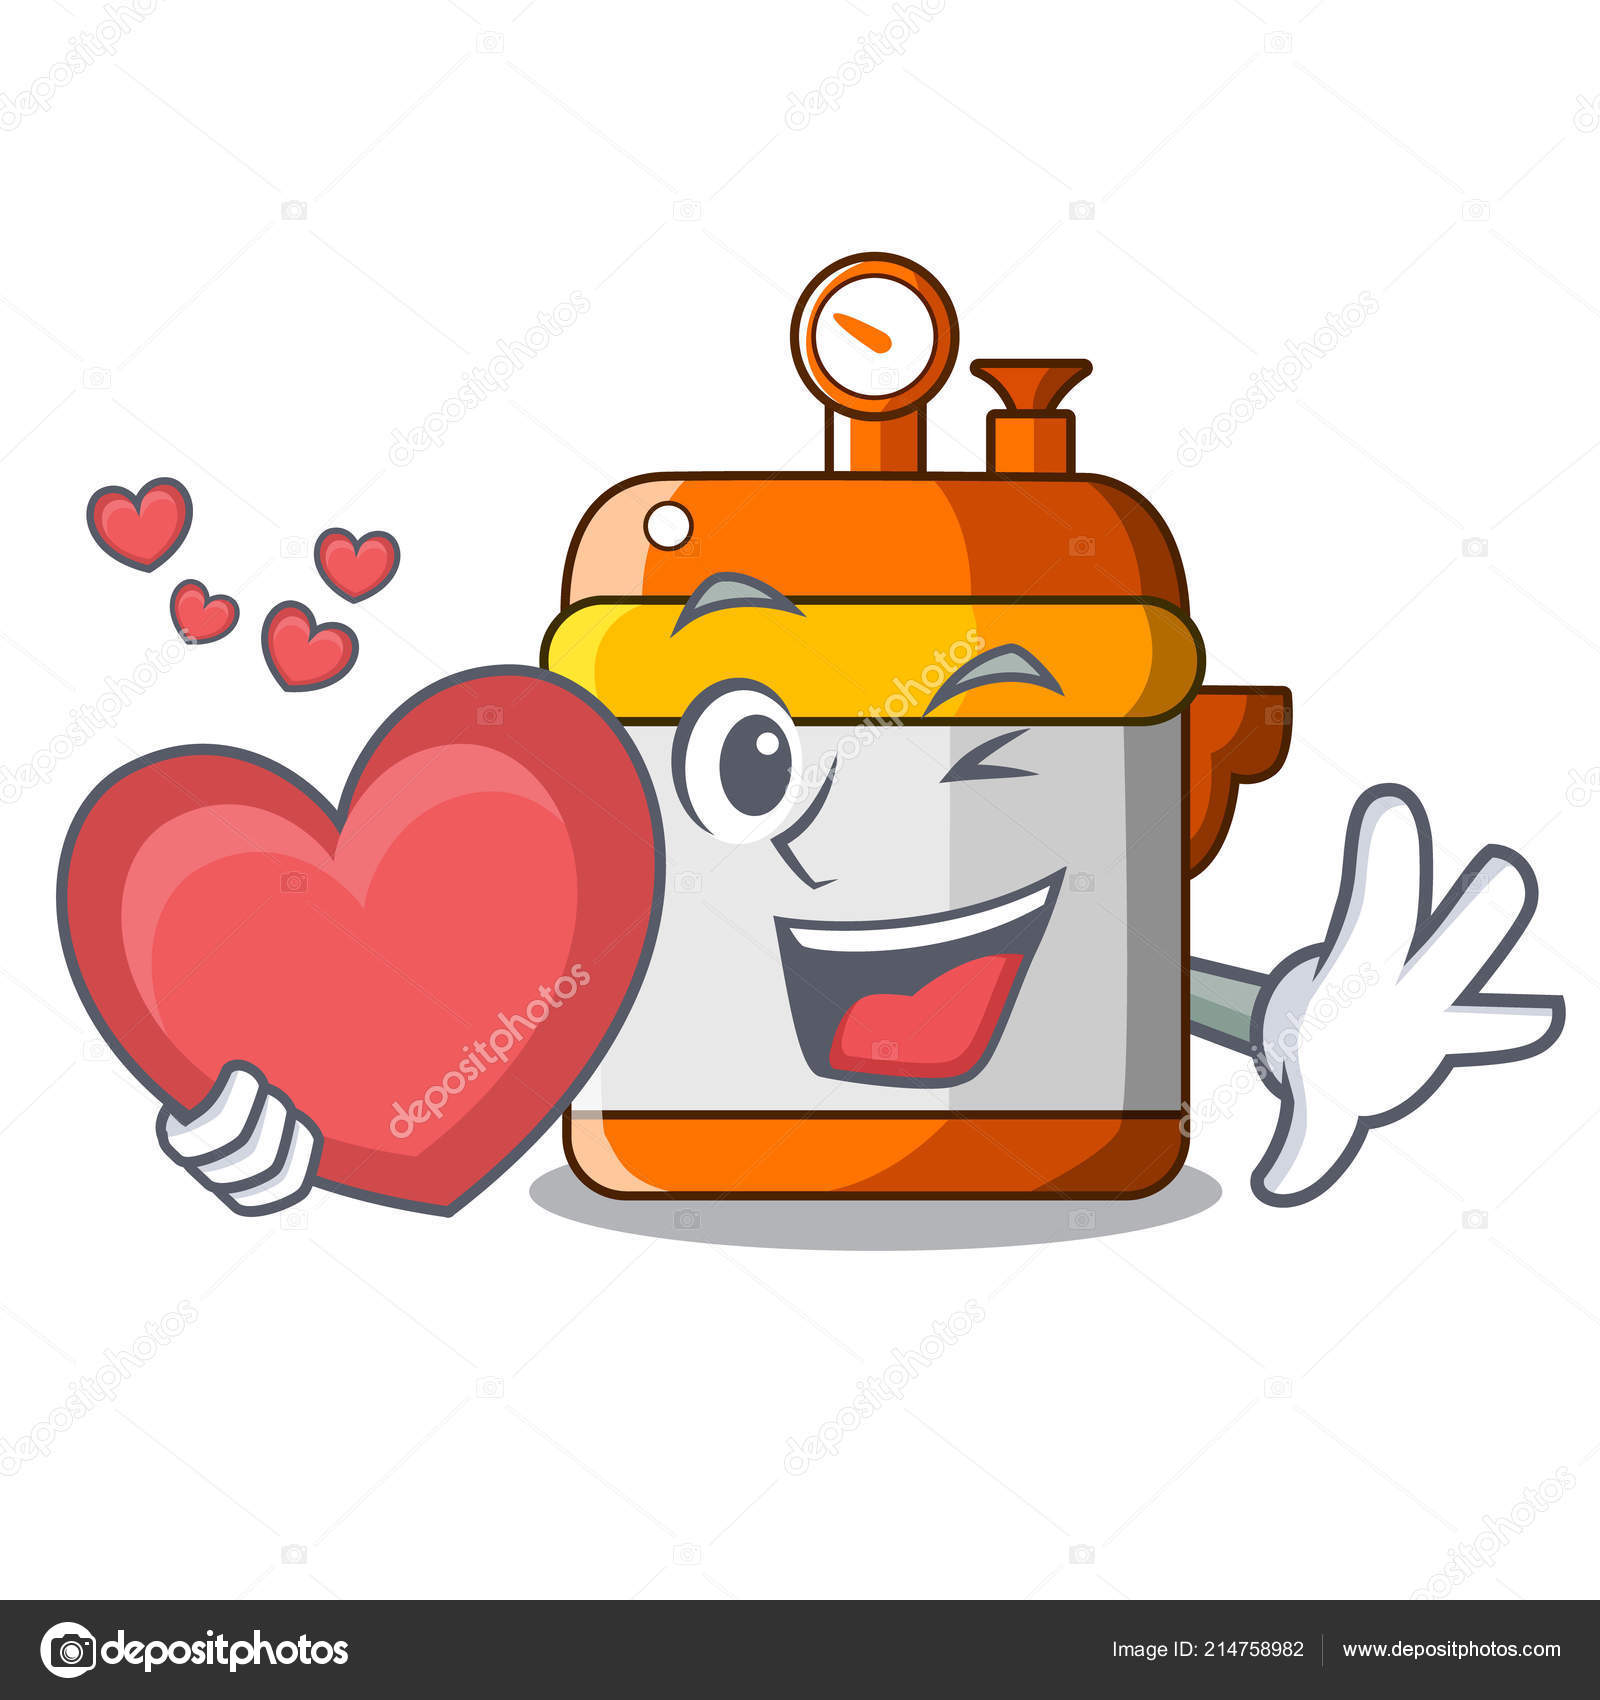 https://st4.depositphotos.com/9034578/21475/v/1600/depositphotos_214758982-stock-illustration-with-heart-electric-rice-cooker.jpg